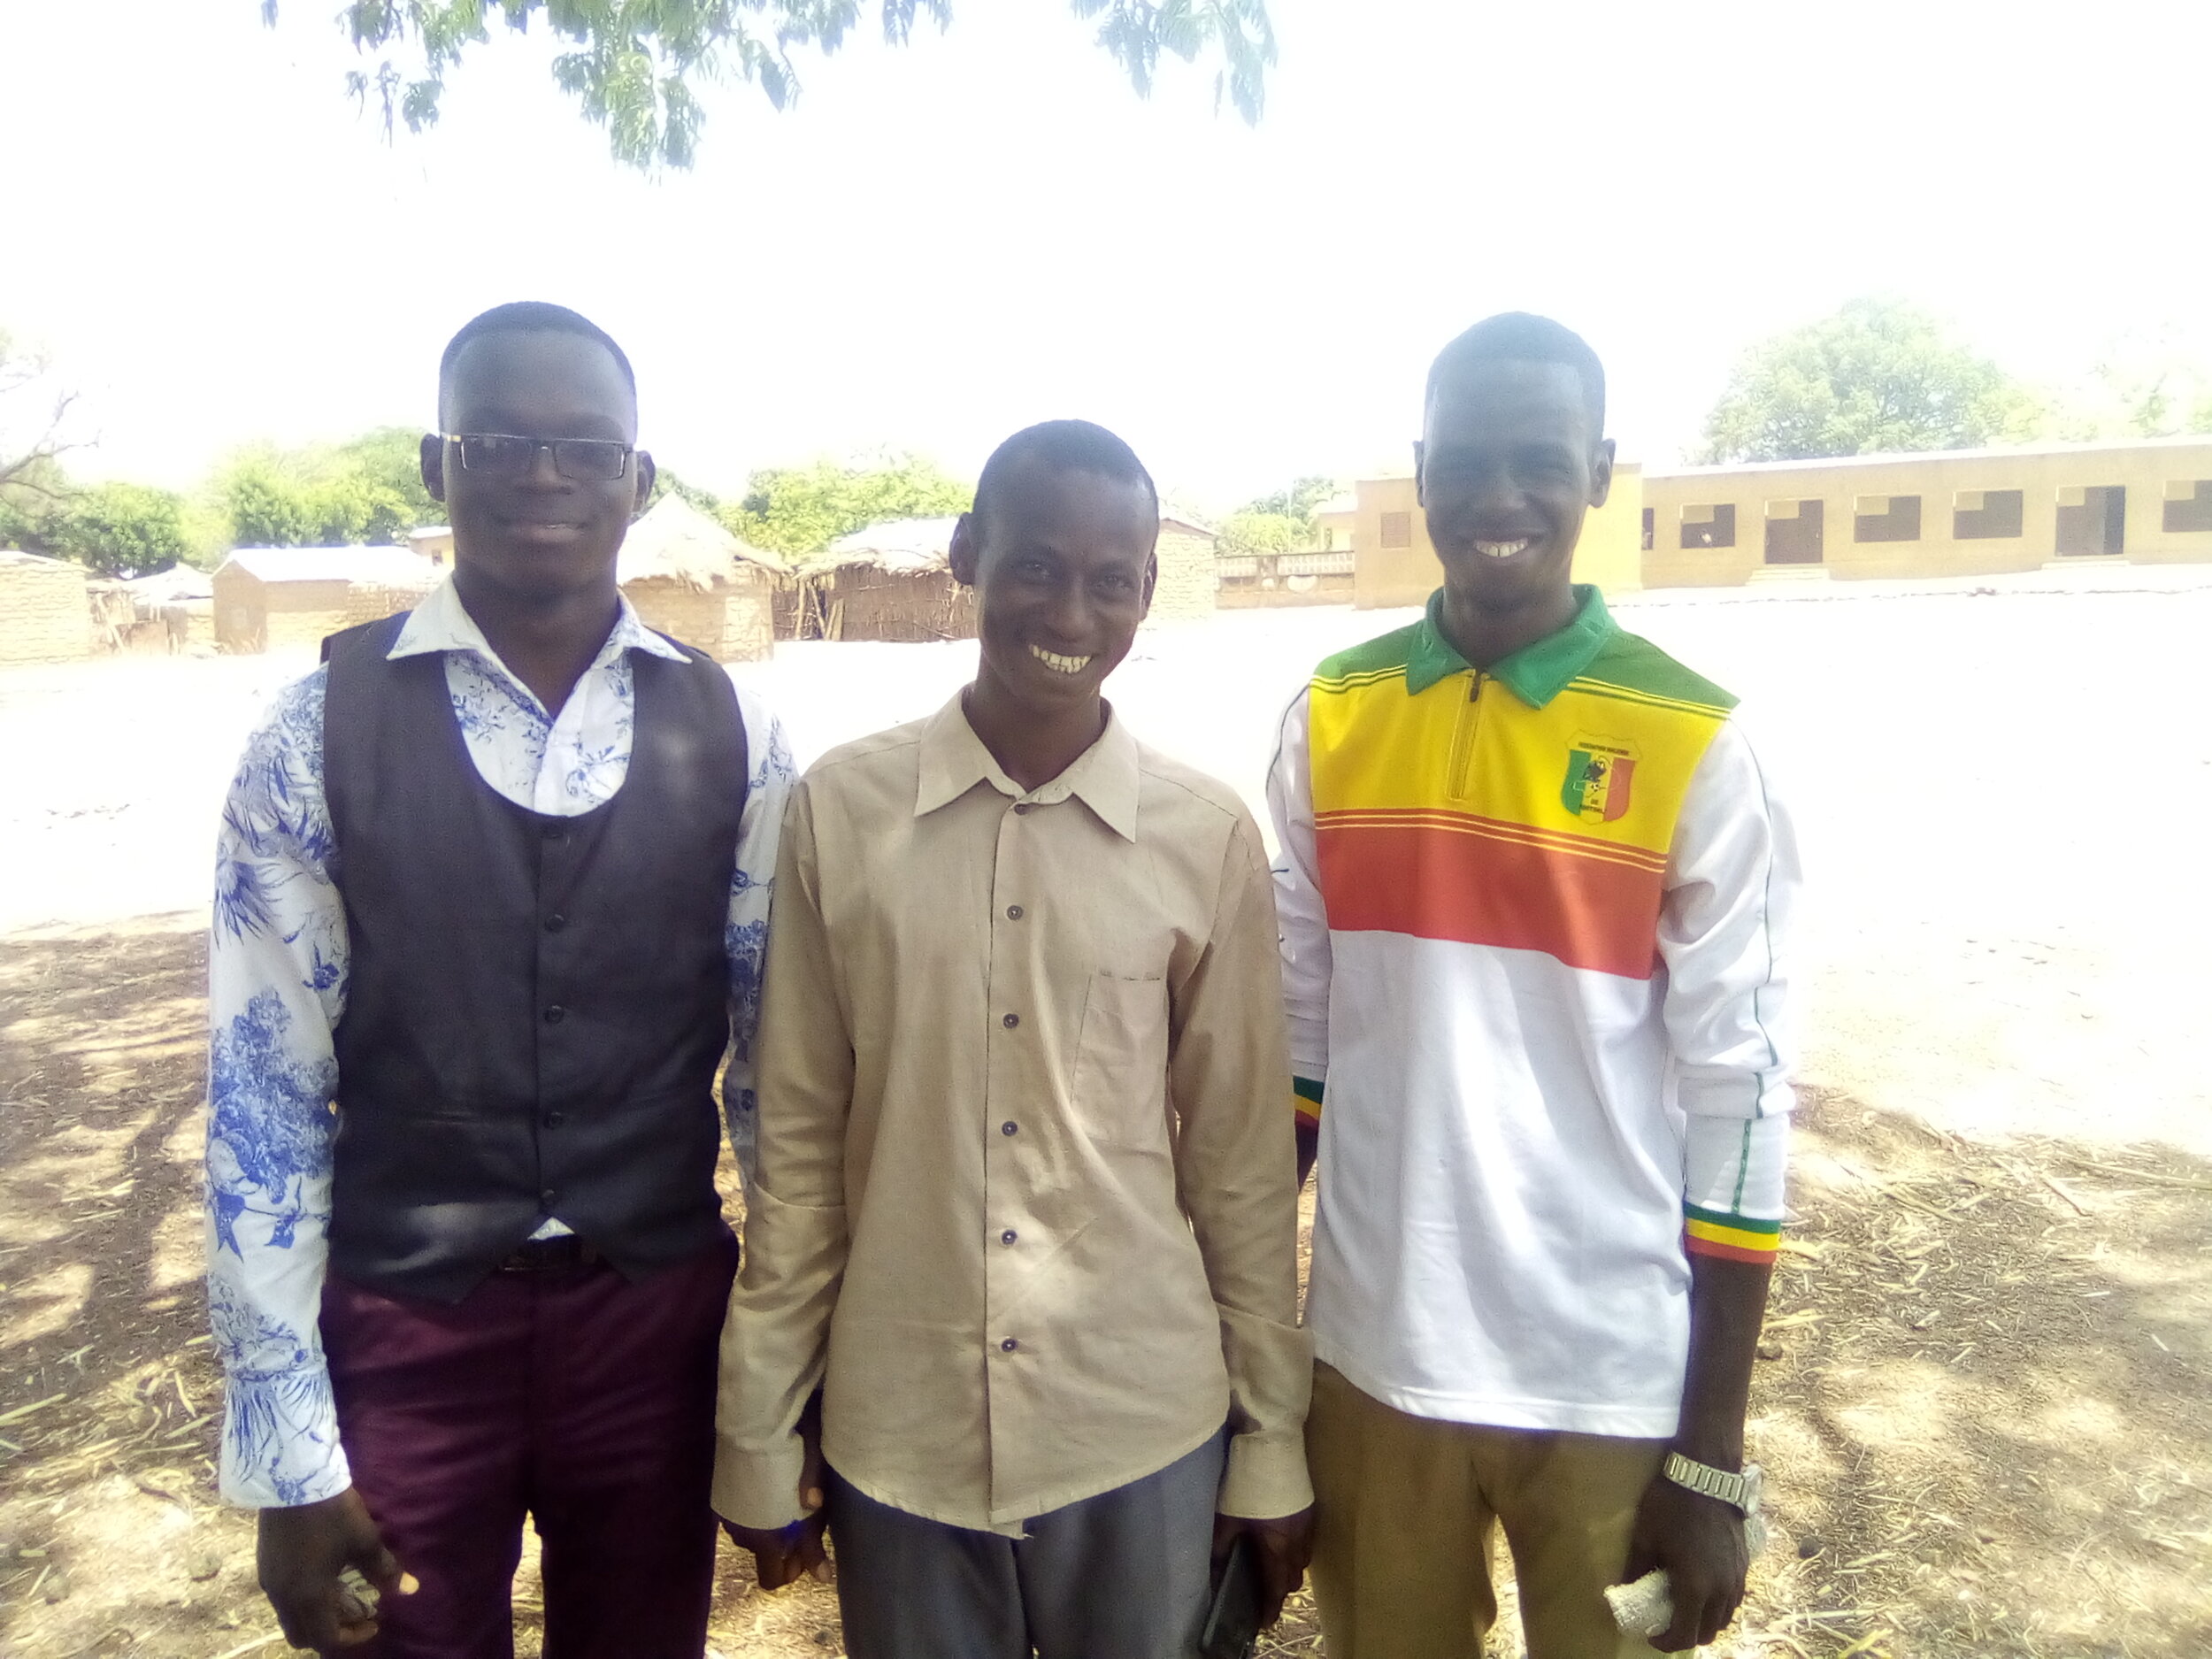 From left to right, science teacher Lamine Mariko, principal Mahamadou Diallo, and math teacher Fousseny Dia.